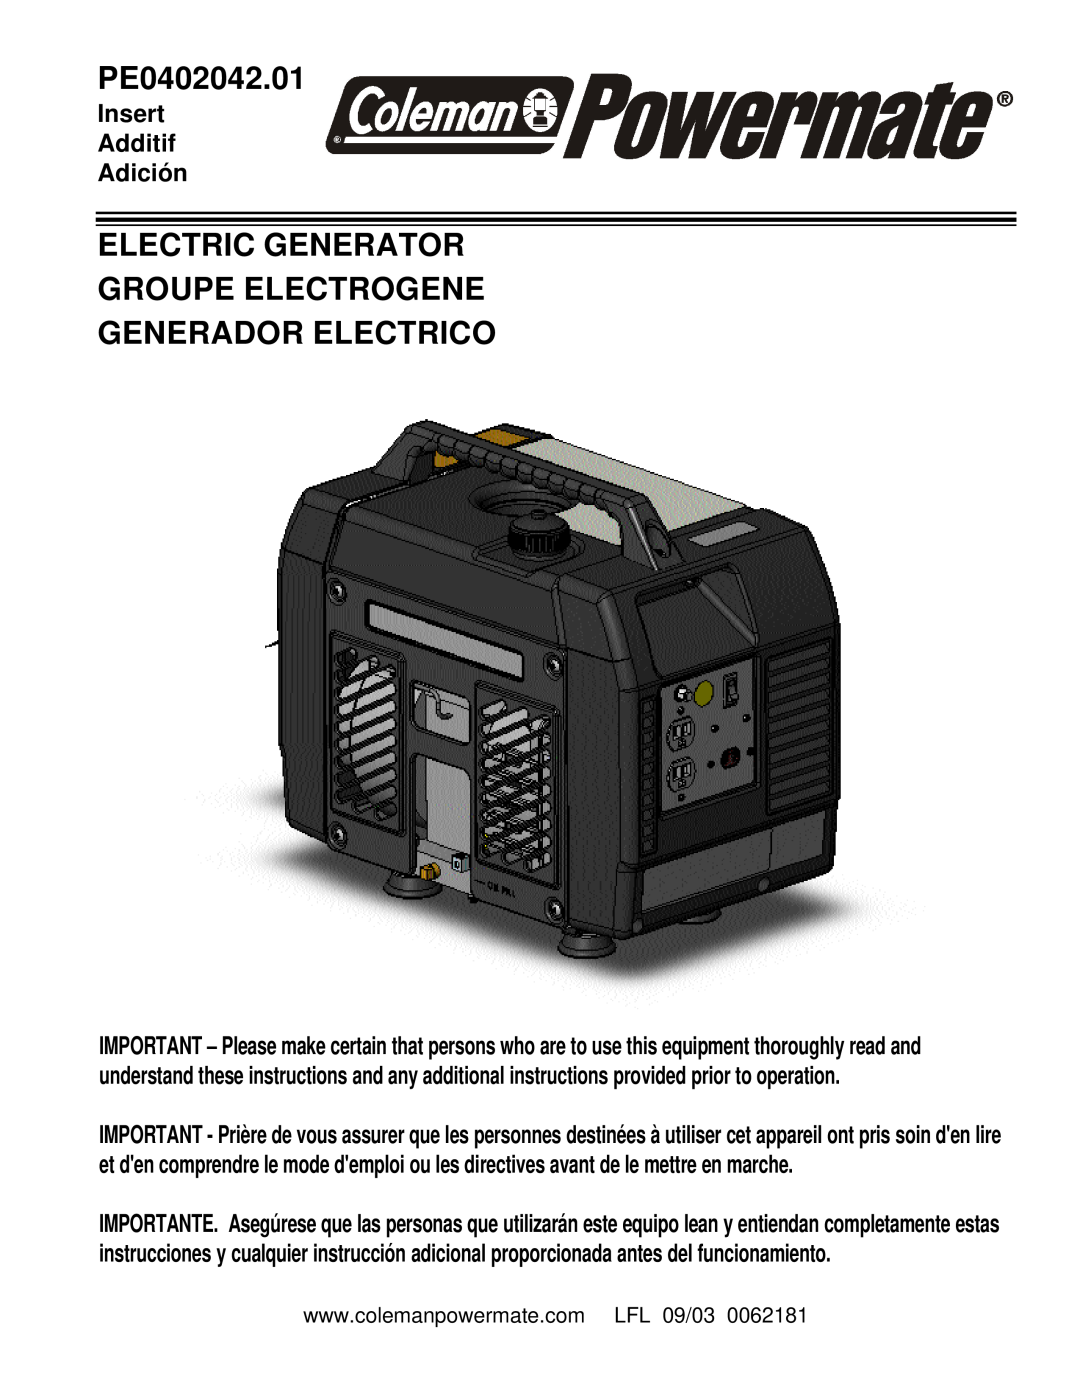 Powermate PE0402042.01 manual Electric Generator Groupe Electrogene Generador Electrico, Insert Additif Adición 